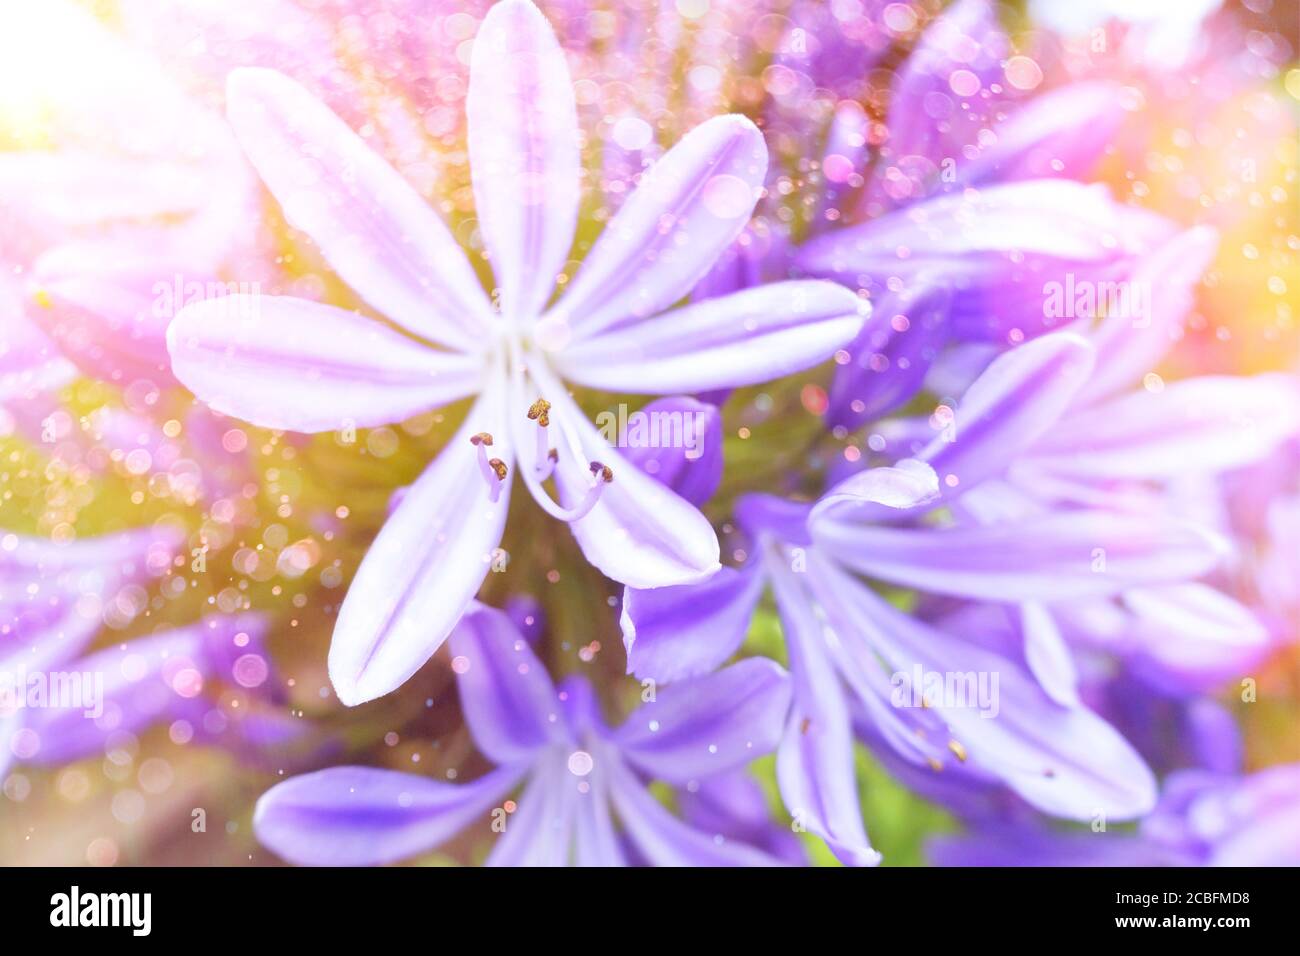 Close-up of purple agapanthus flowers, soft light, nostalgic and romantic background texture. Stock Photo